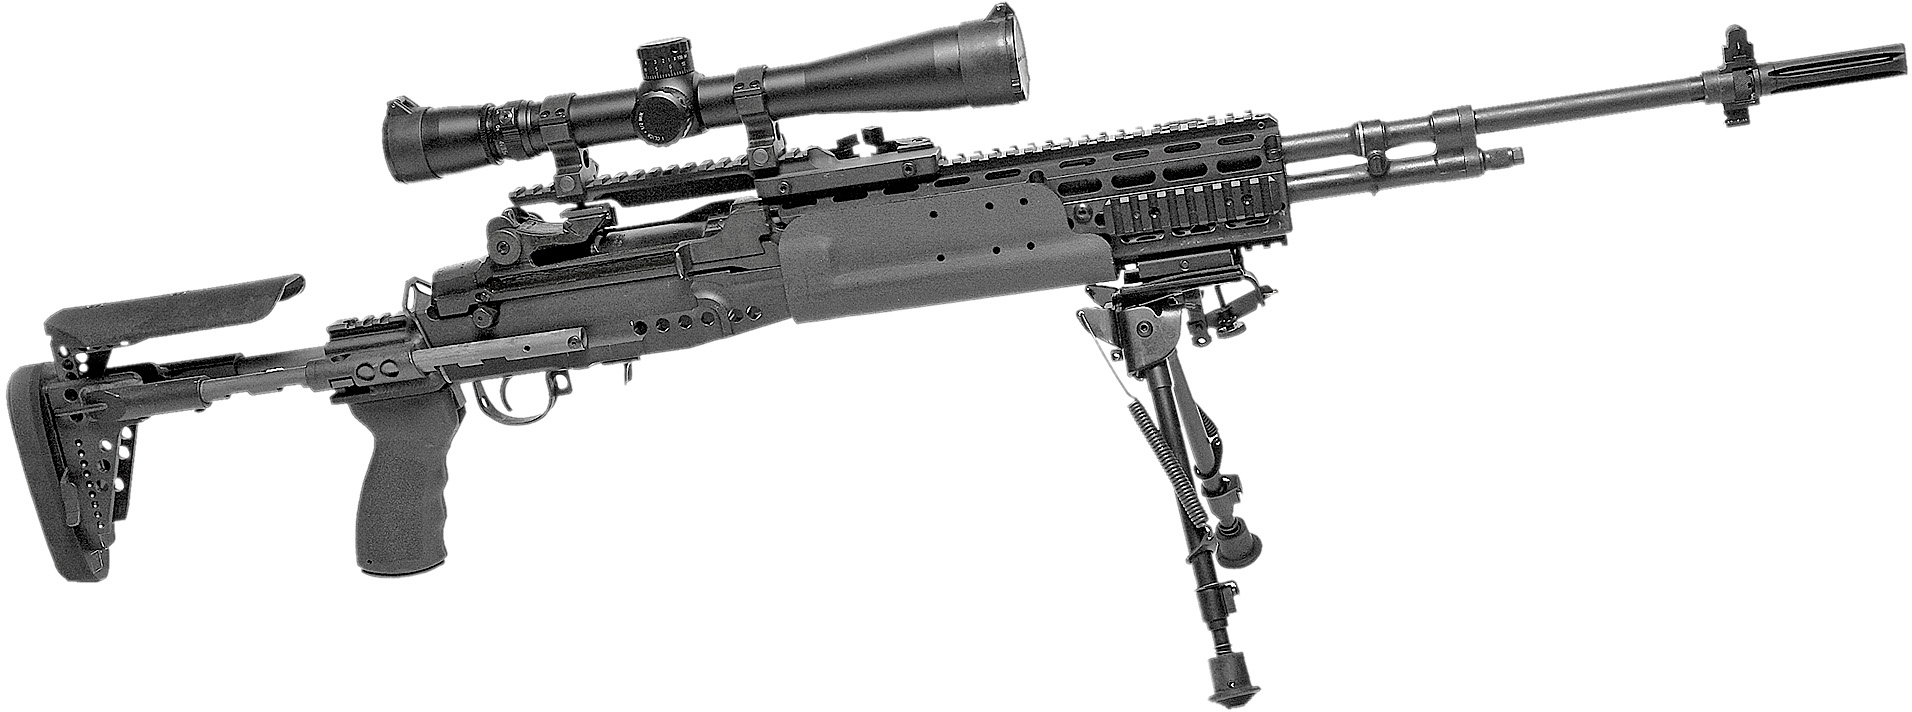 Mark 14 Enhanced Battle Rifle